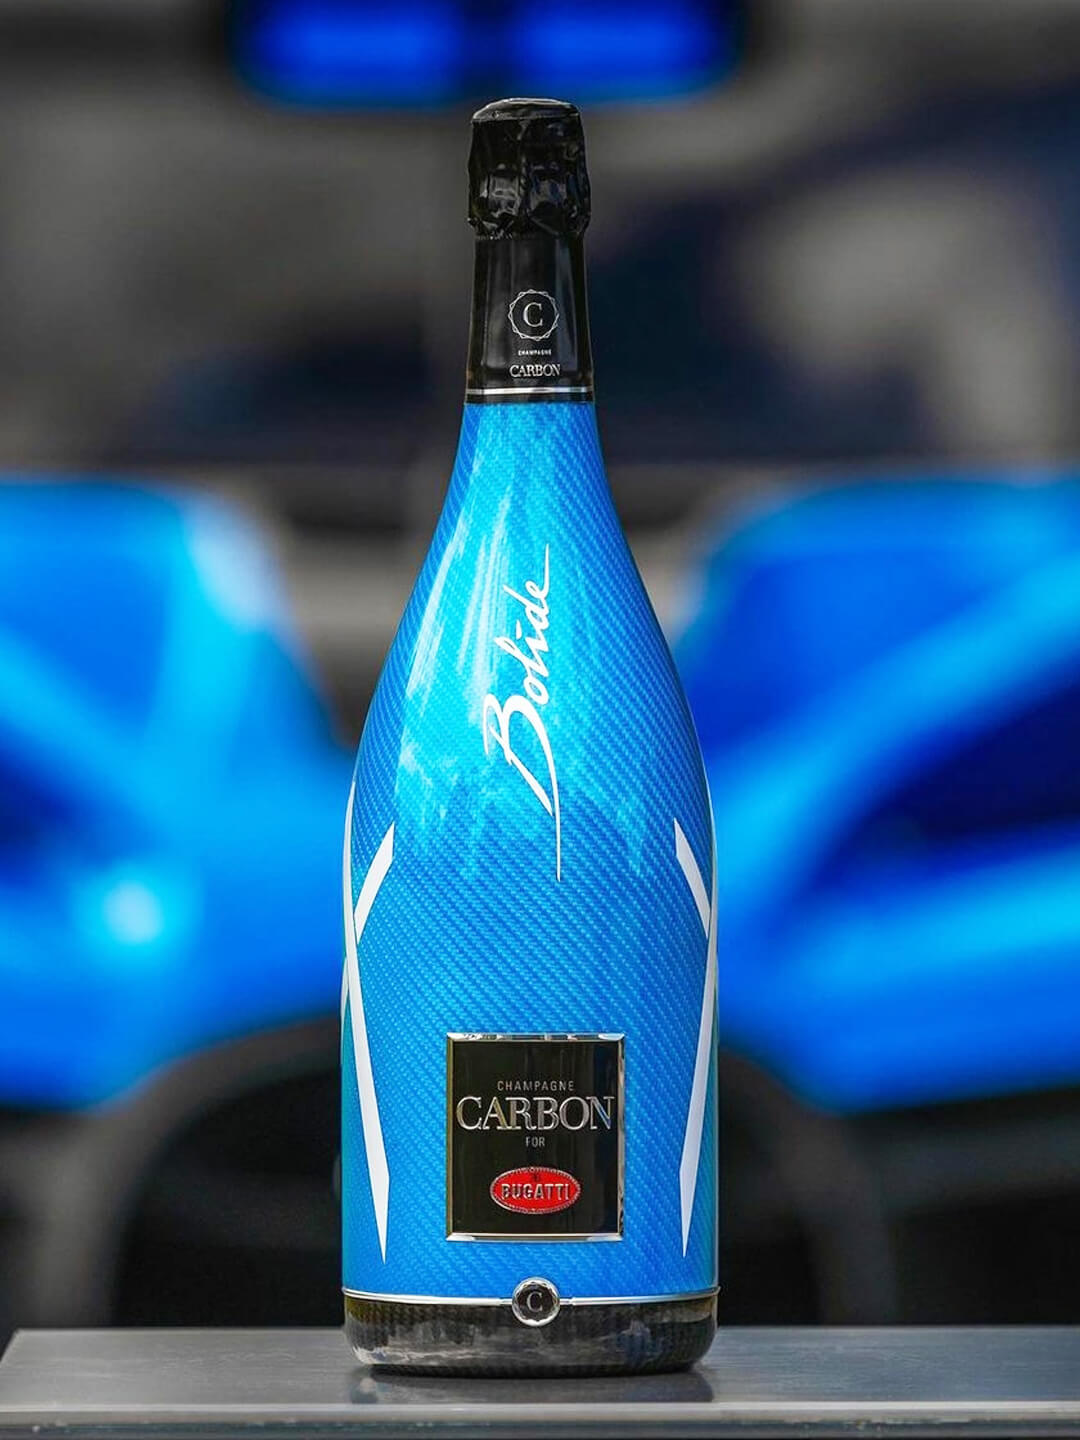 Champagne CARBON Bugatti Bolide ƎB.03 | Vintage 2017